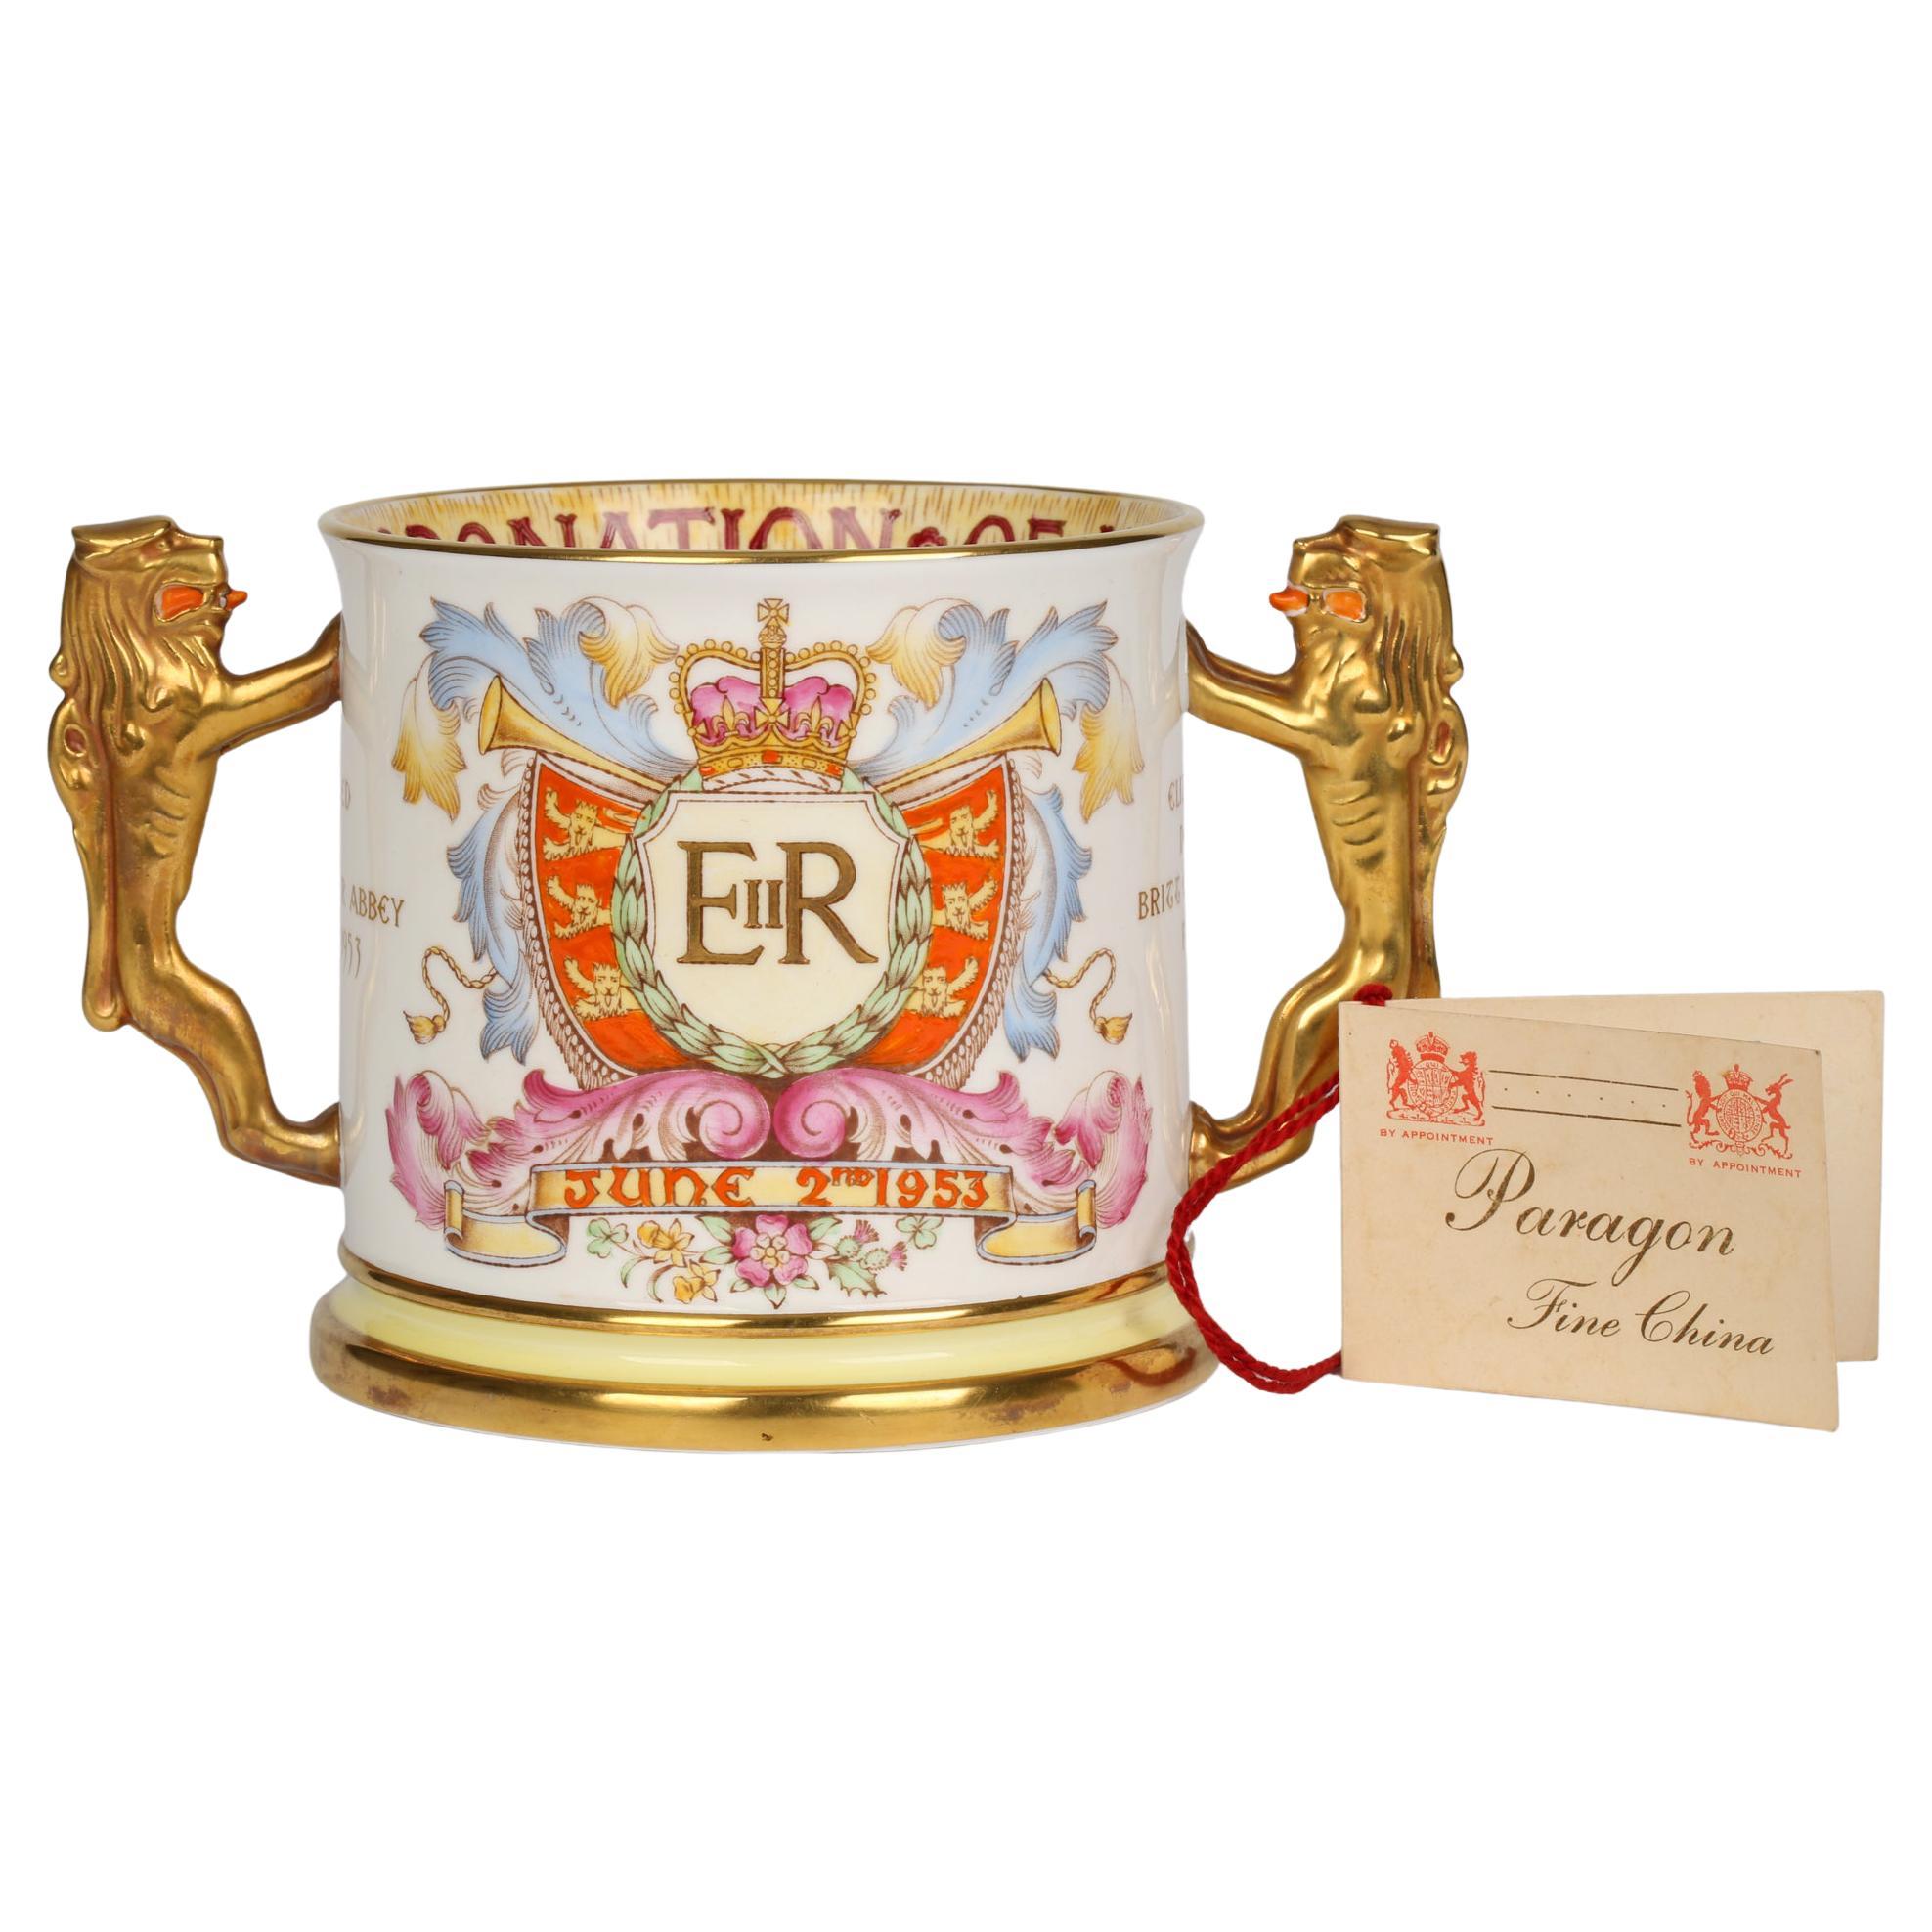 Paragon Ltd Edn Porcelain Tyg Commemorating Coronation of Queen Elizabeth II 195